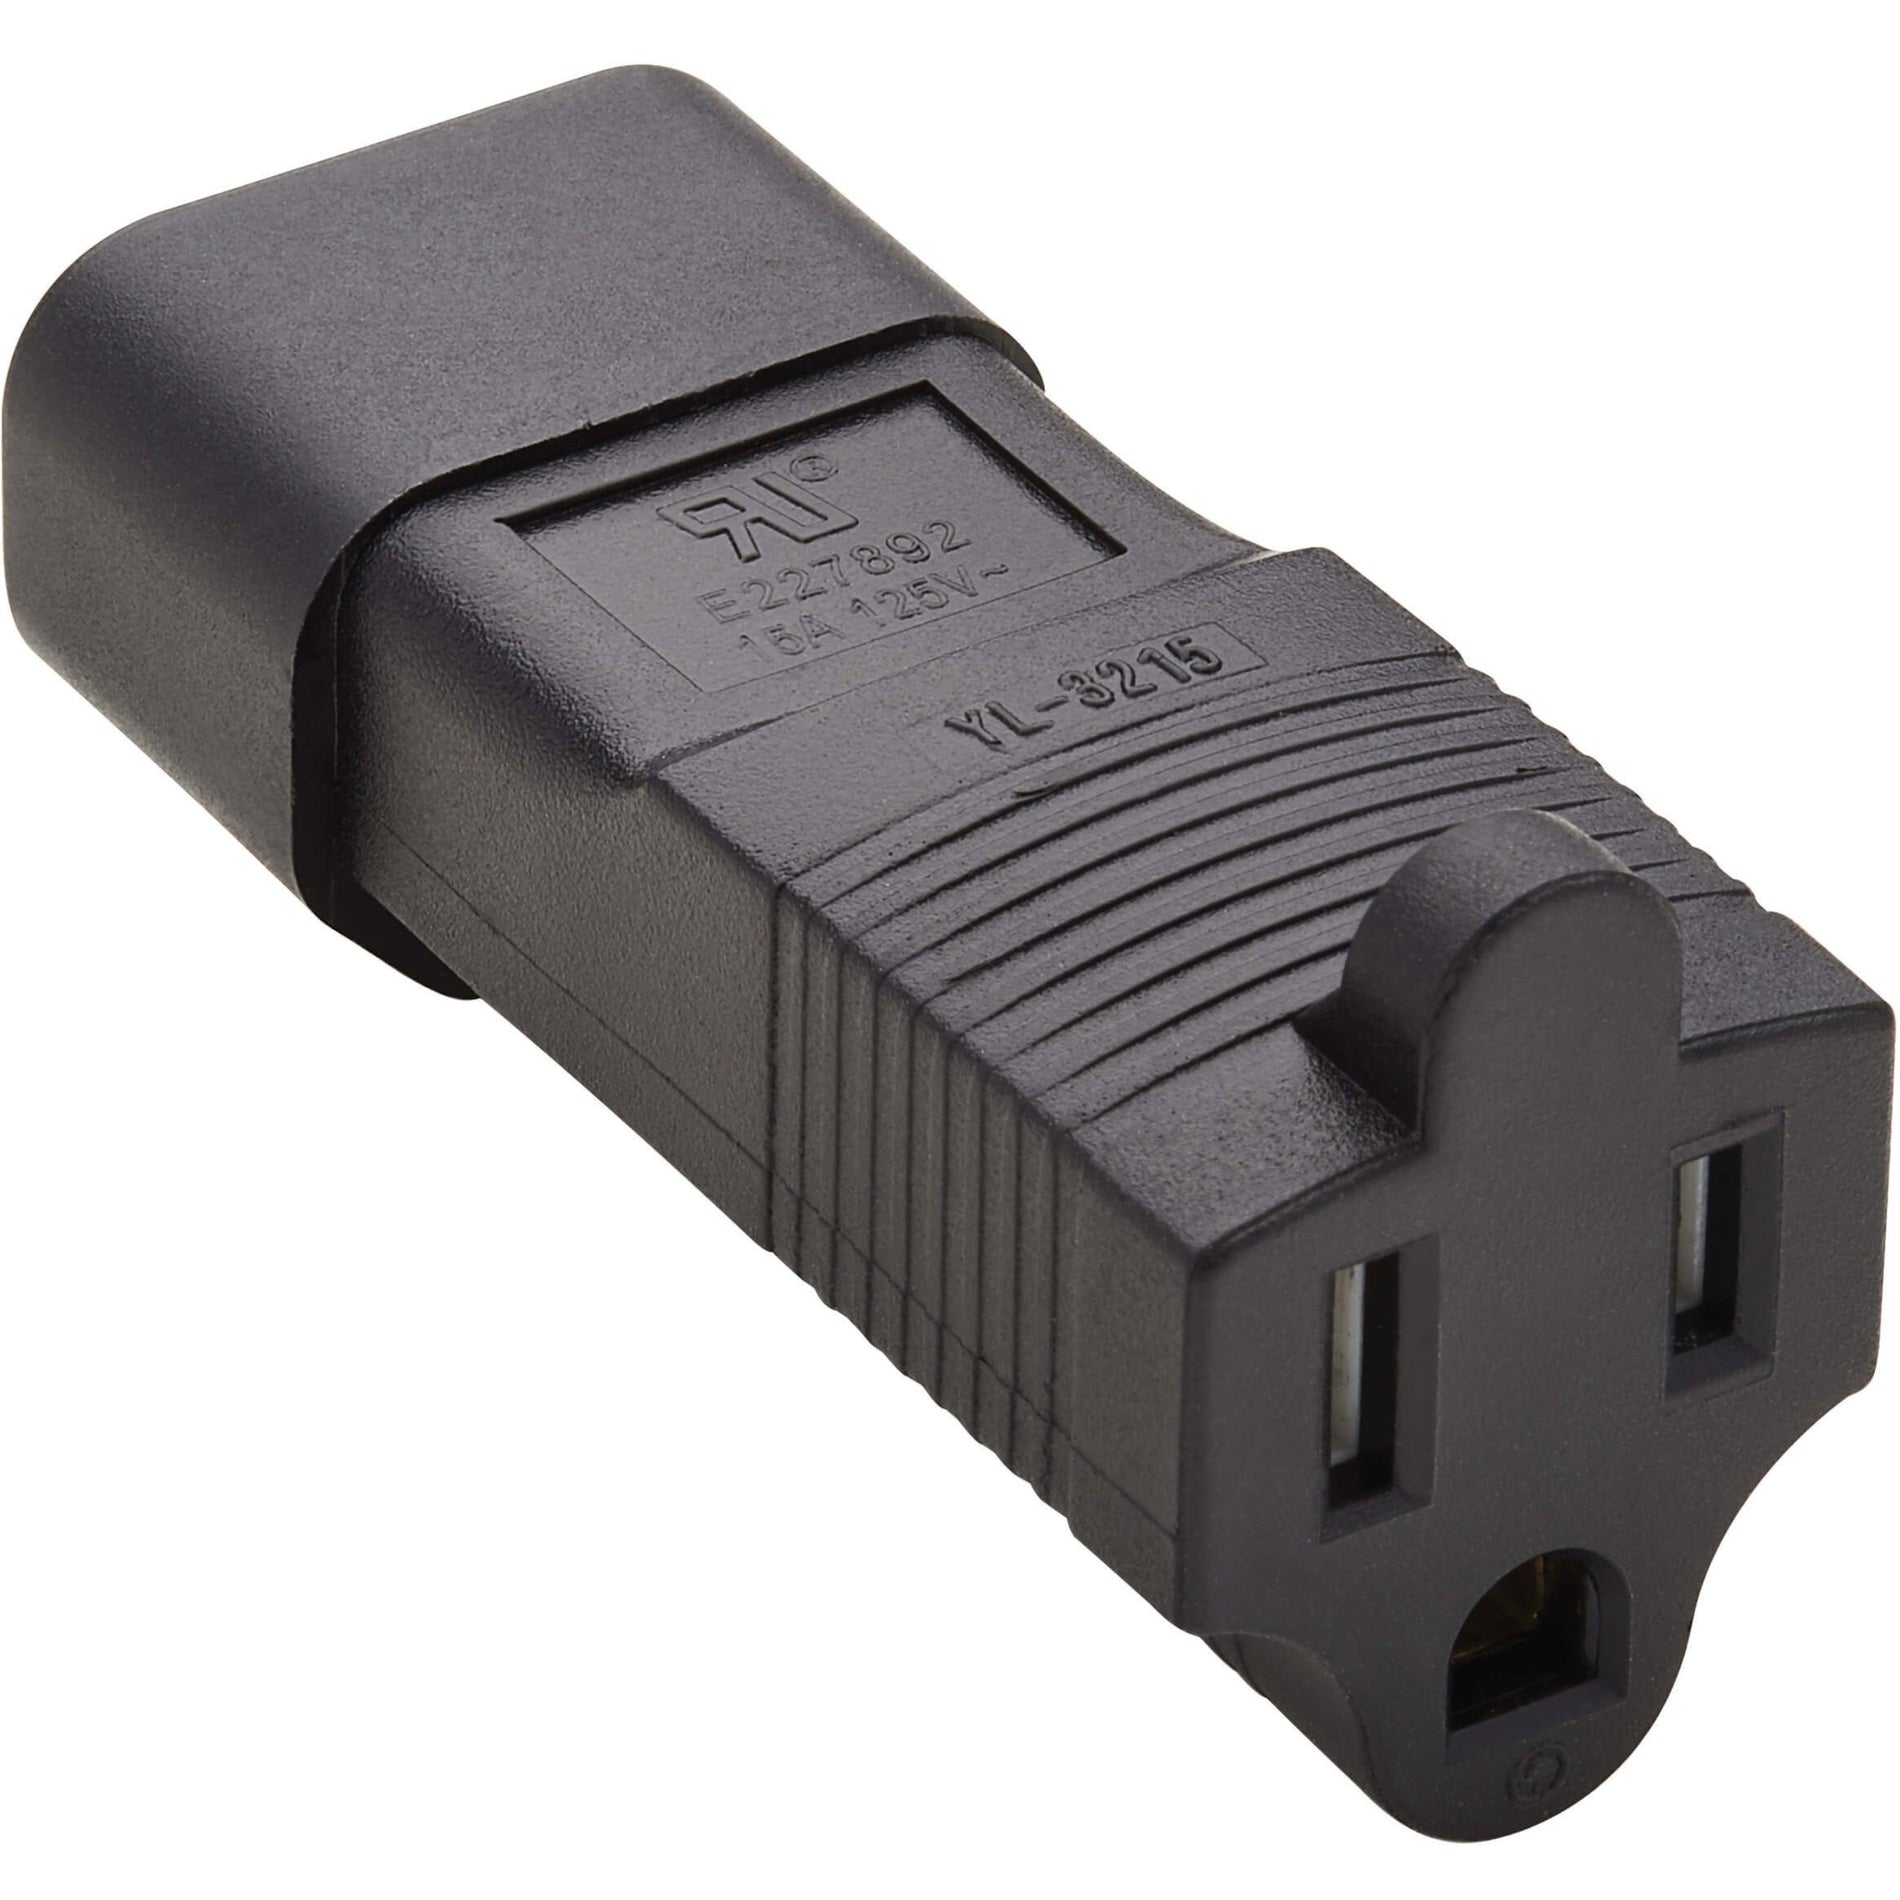 Tripp Lite P002-000 NEMA 5-15R to C14 Power Cord Adapter, 10A, 125V, Black